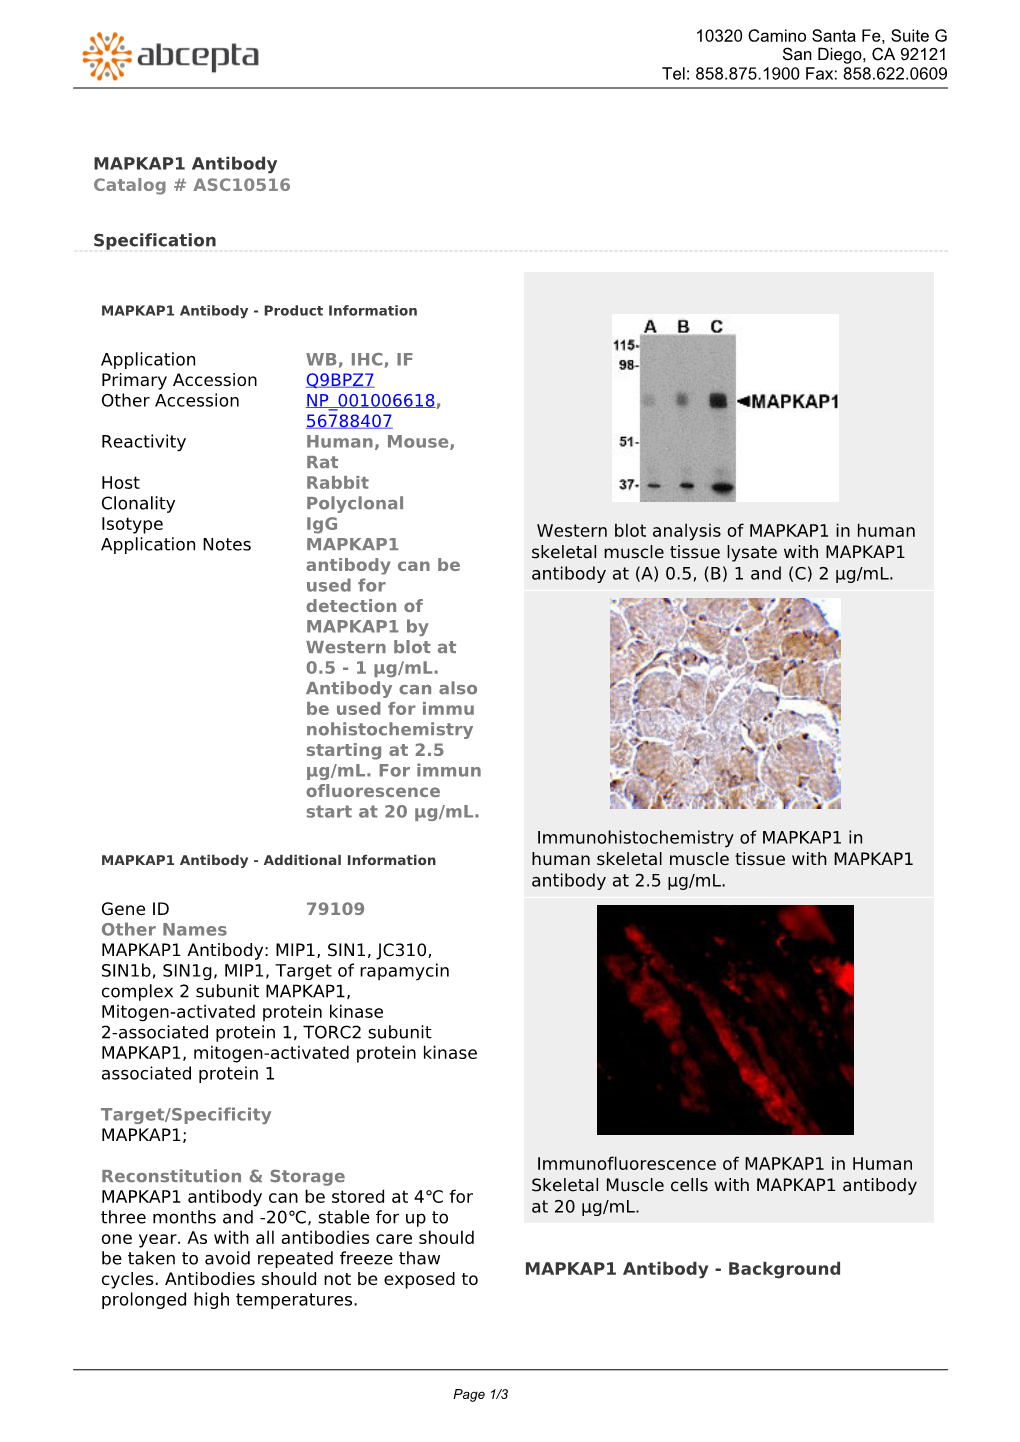 MAPKAP1 Antibody Catalog # ASC10516